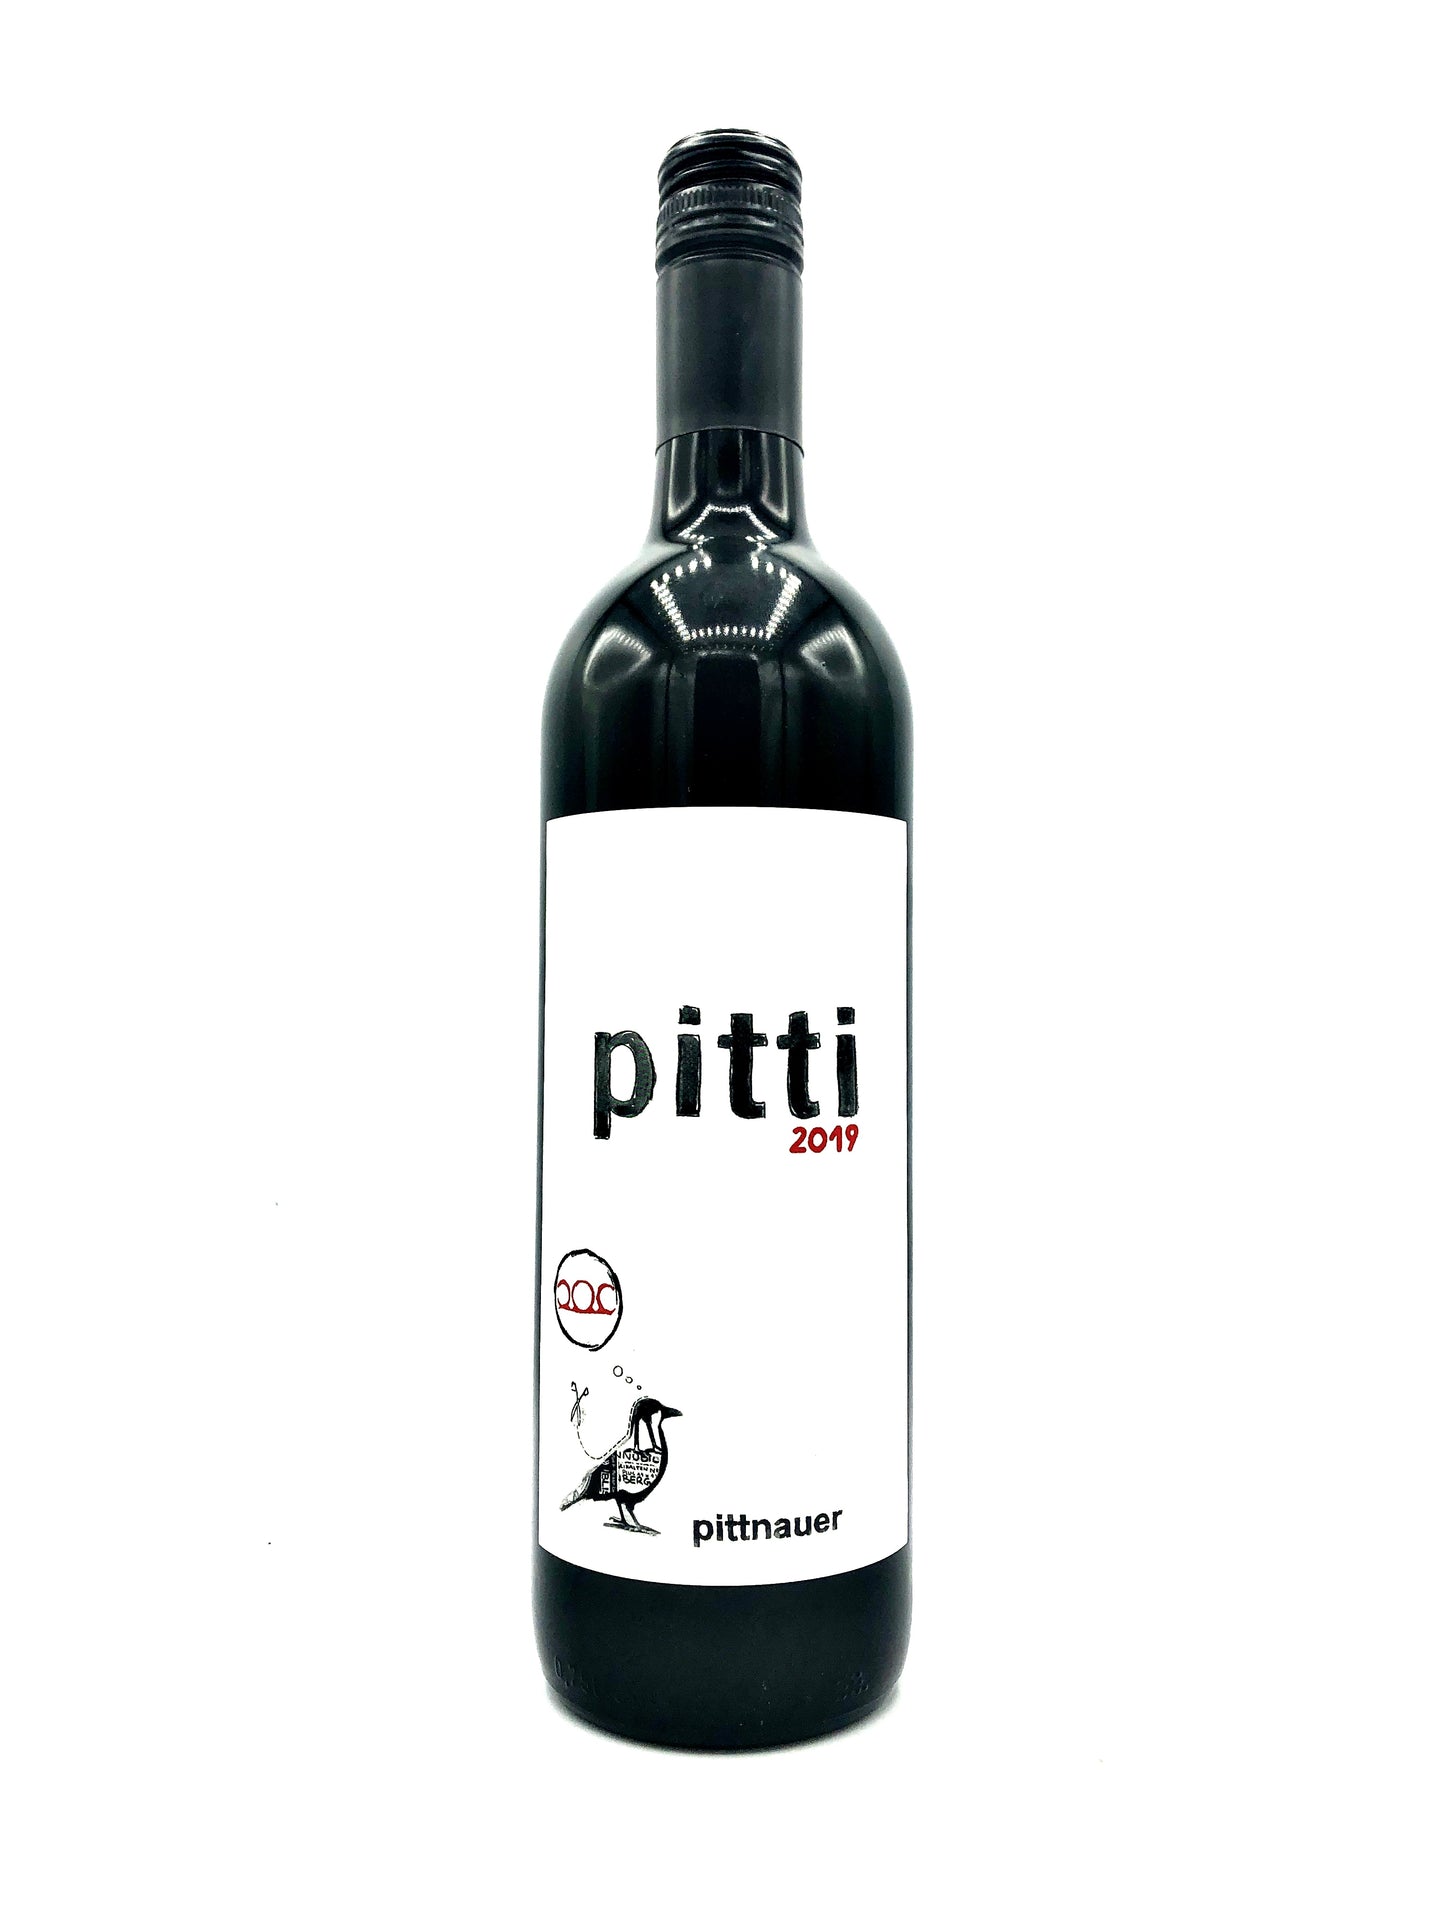 Weingut Pittnauer 'Pitti' 2019